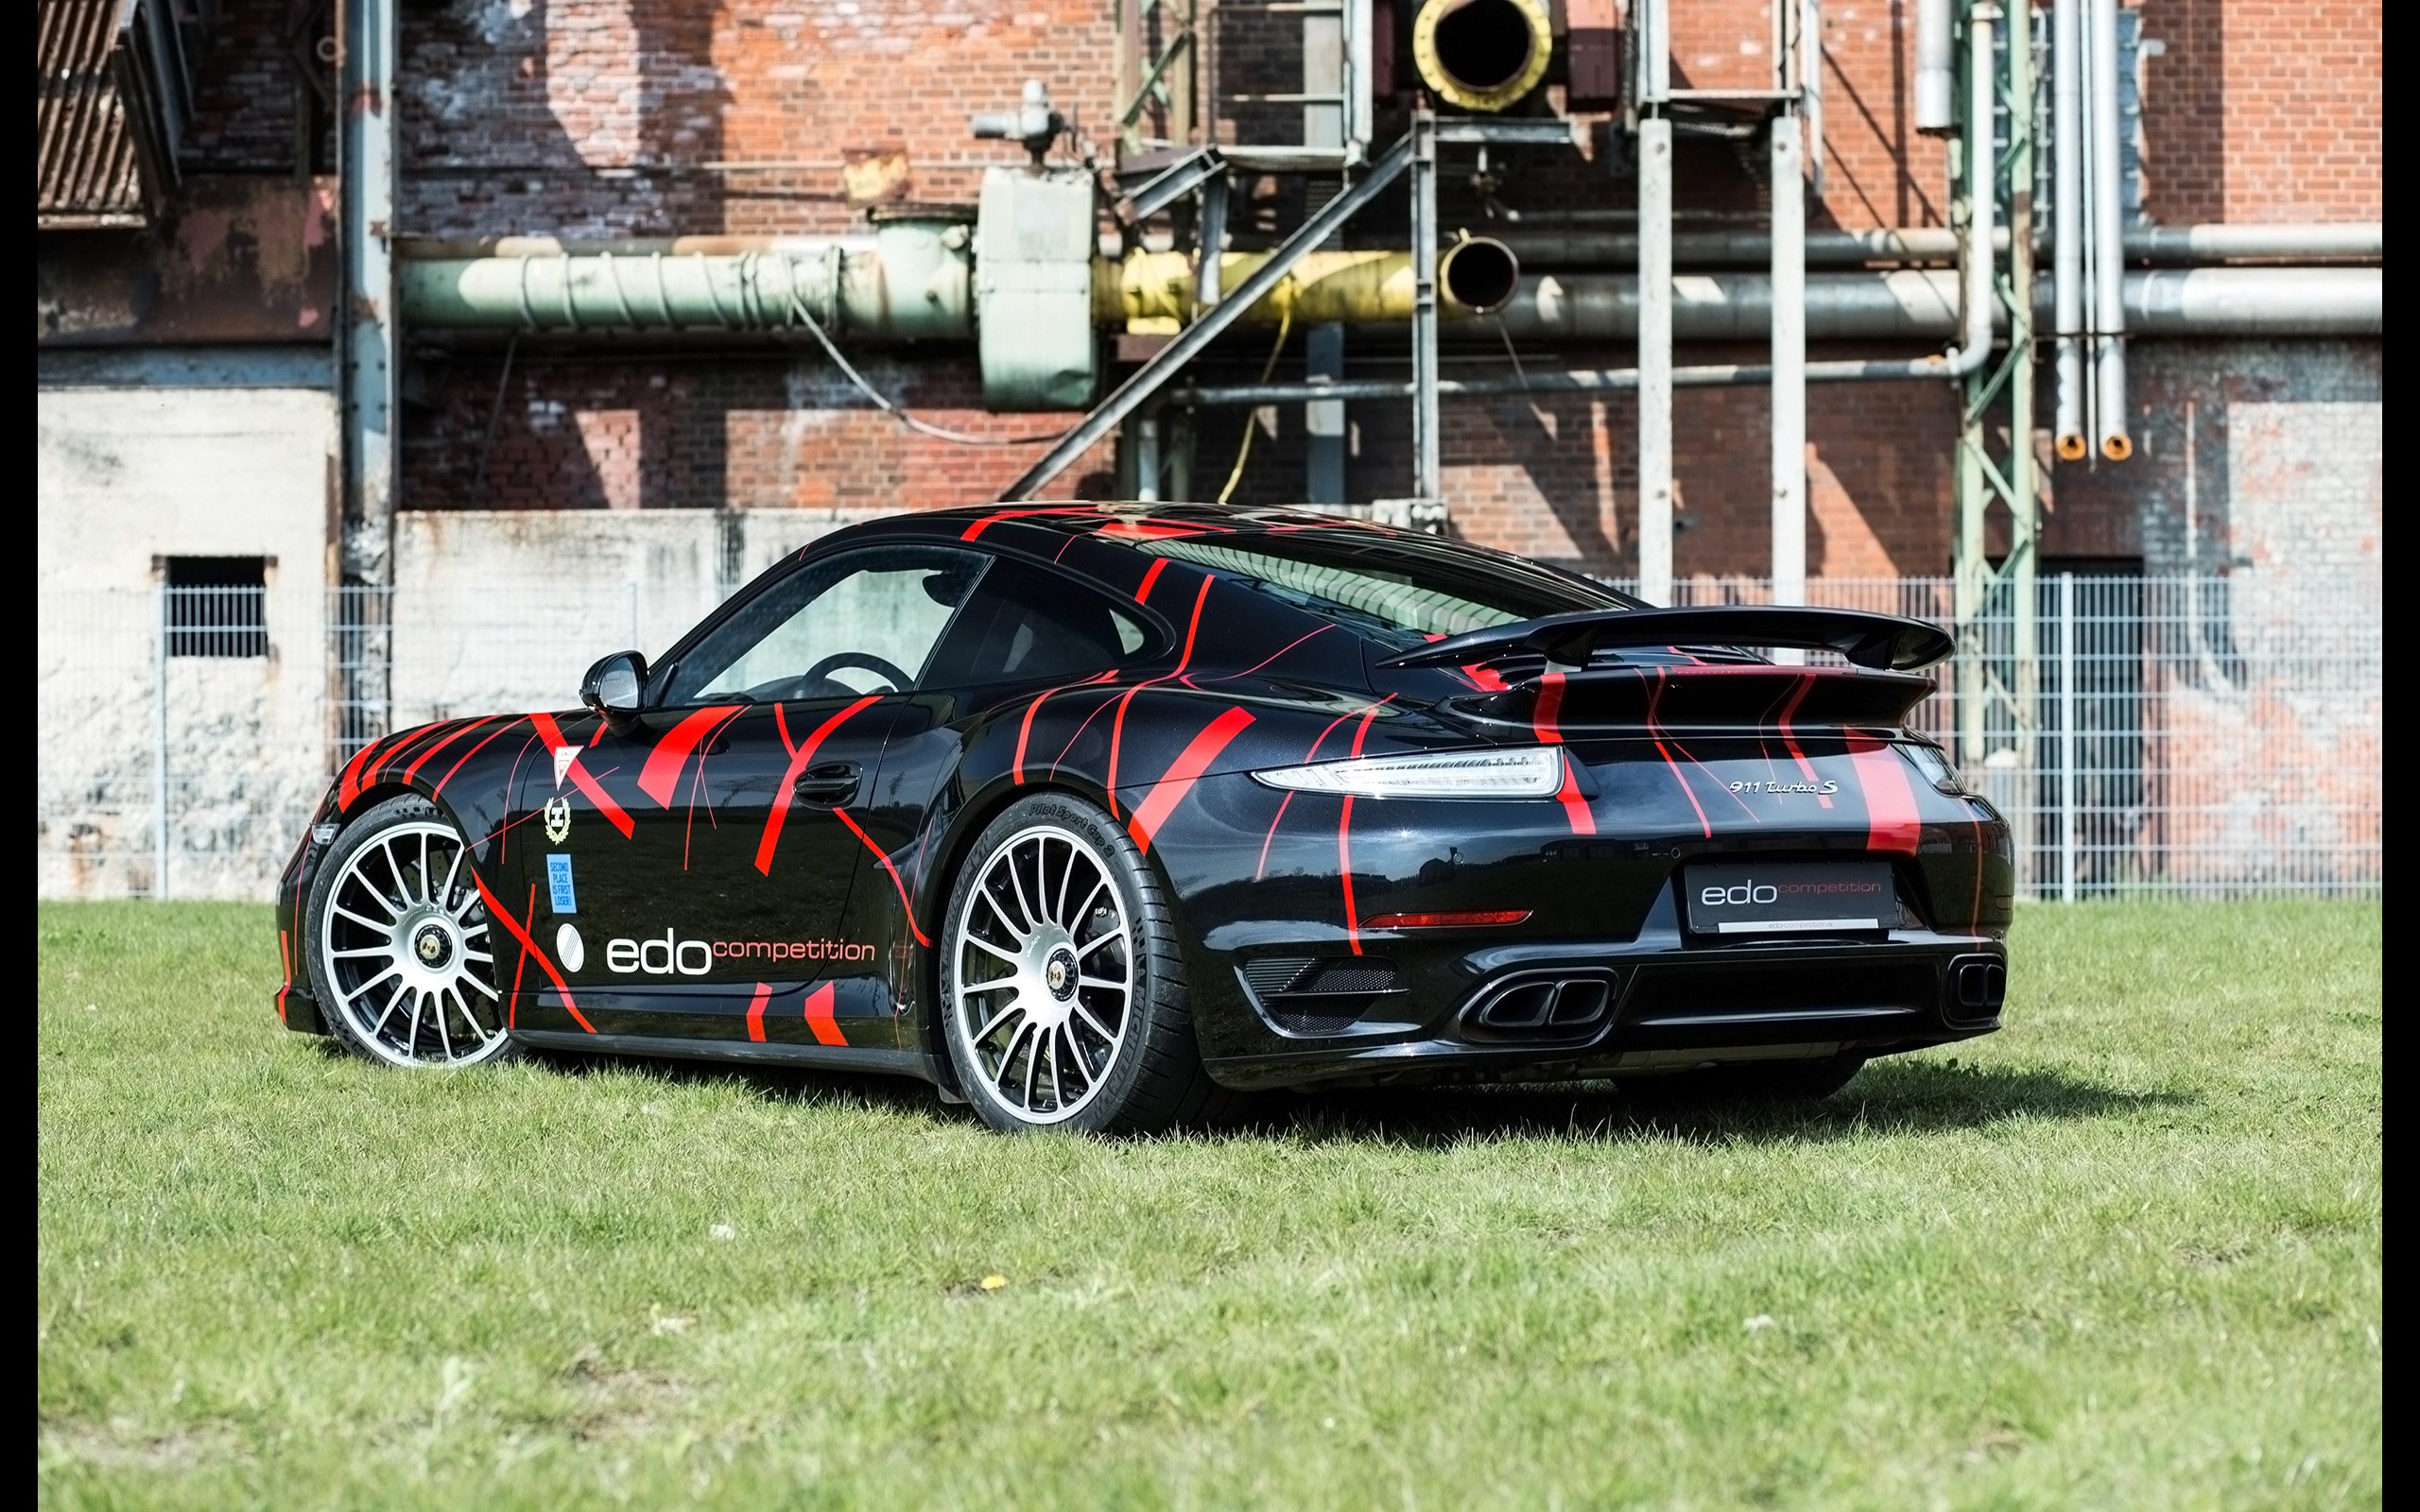 2014, Edo competition, Porsche, 991, Turbo, S, Tuning, 911 Wallpaper